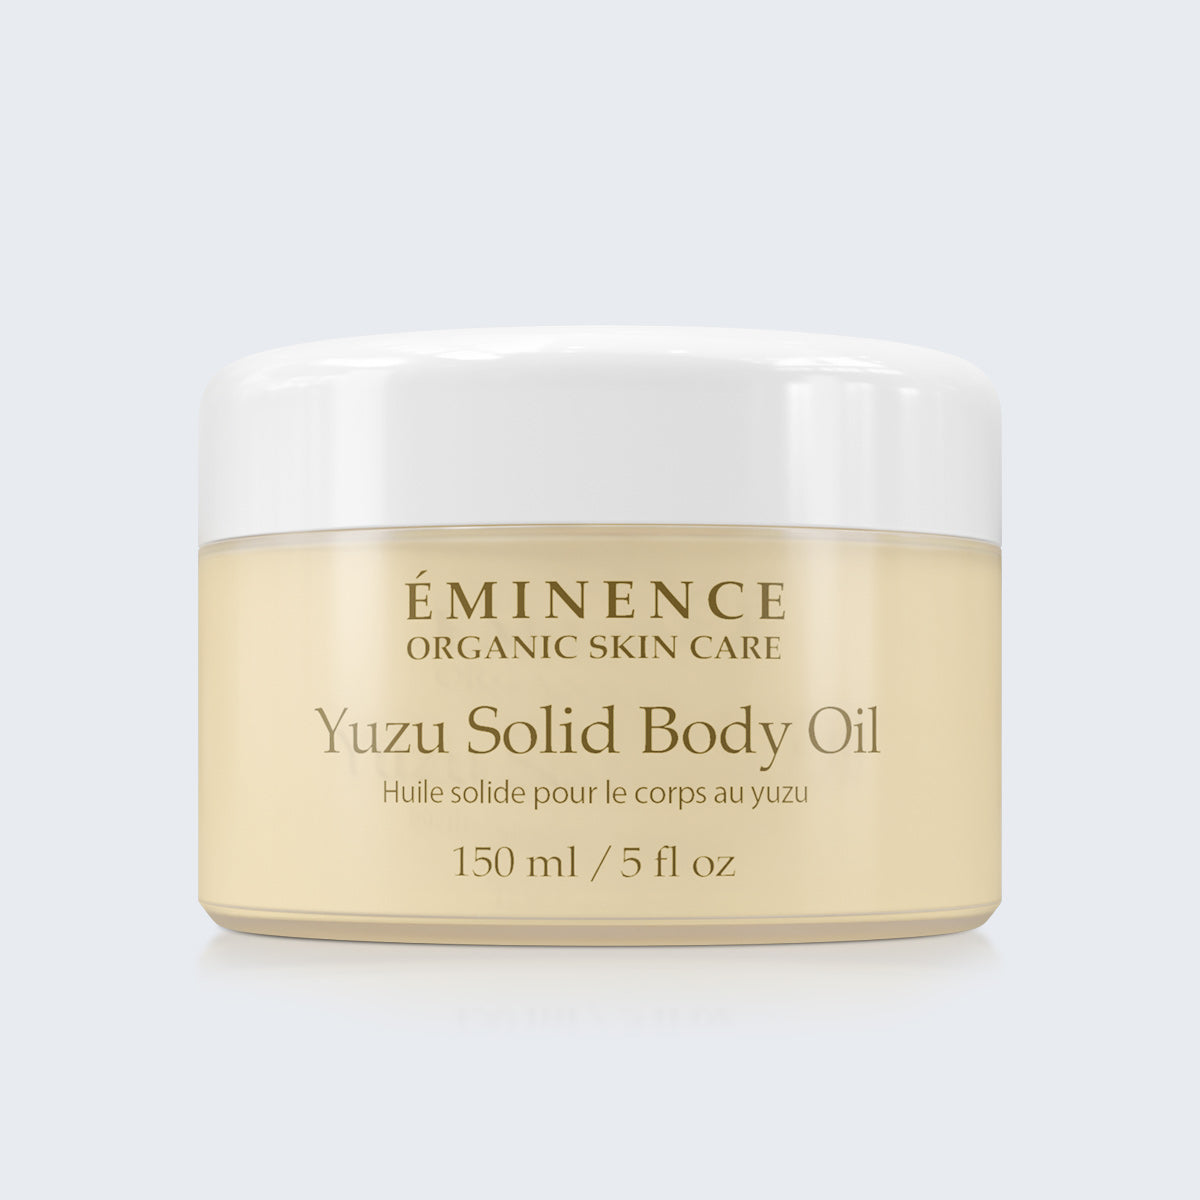 Yuzu beauty news - a fragrance, a foundation, and a fabulous fruit